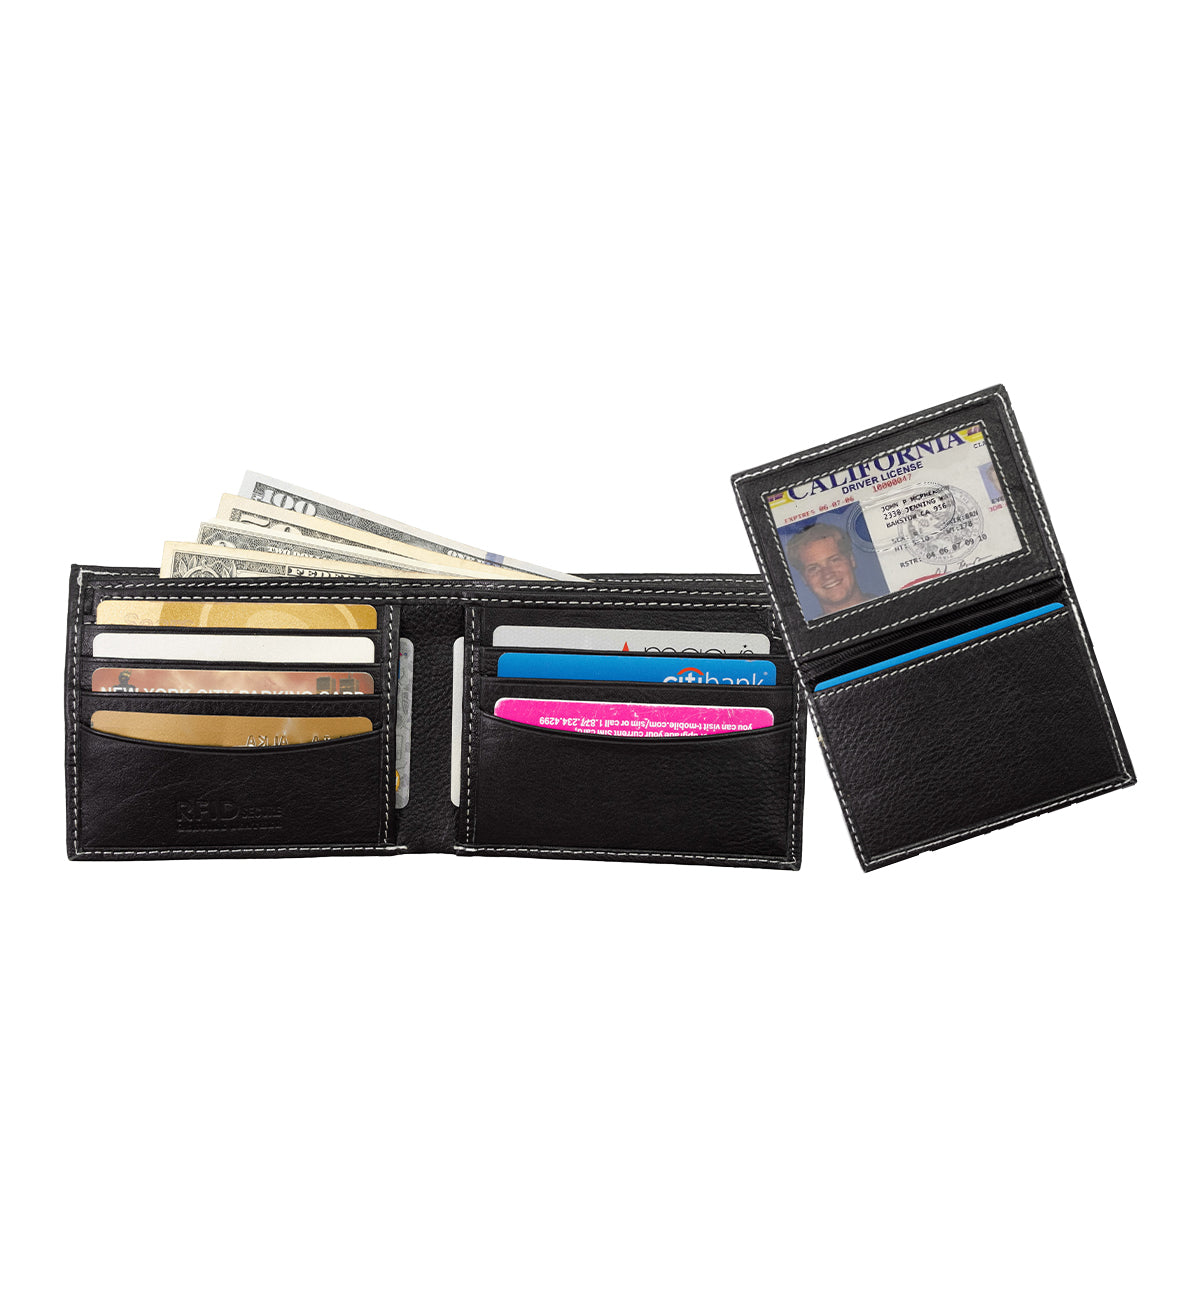 RFID Blocking Genuine Leather Men's Bifold Premium Wallet With Removable Handmade